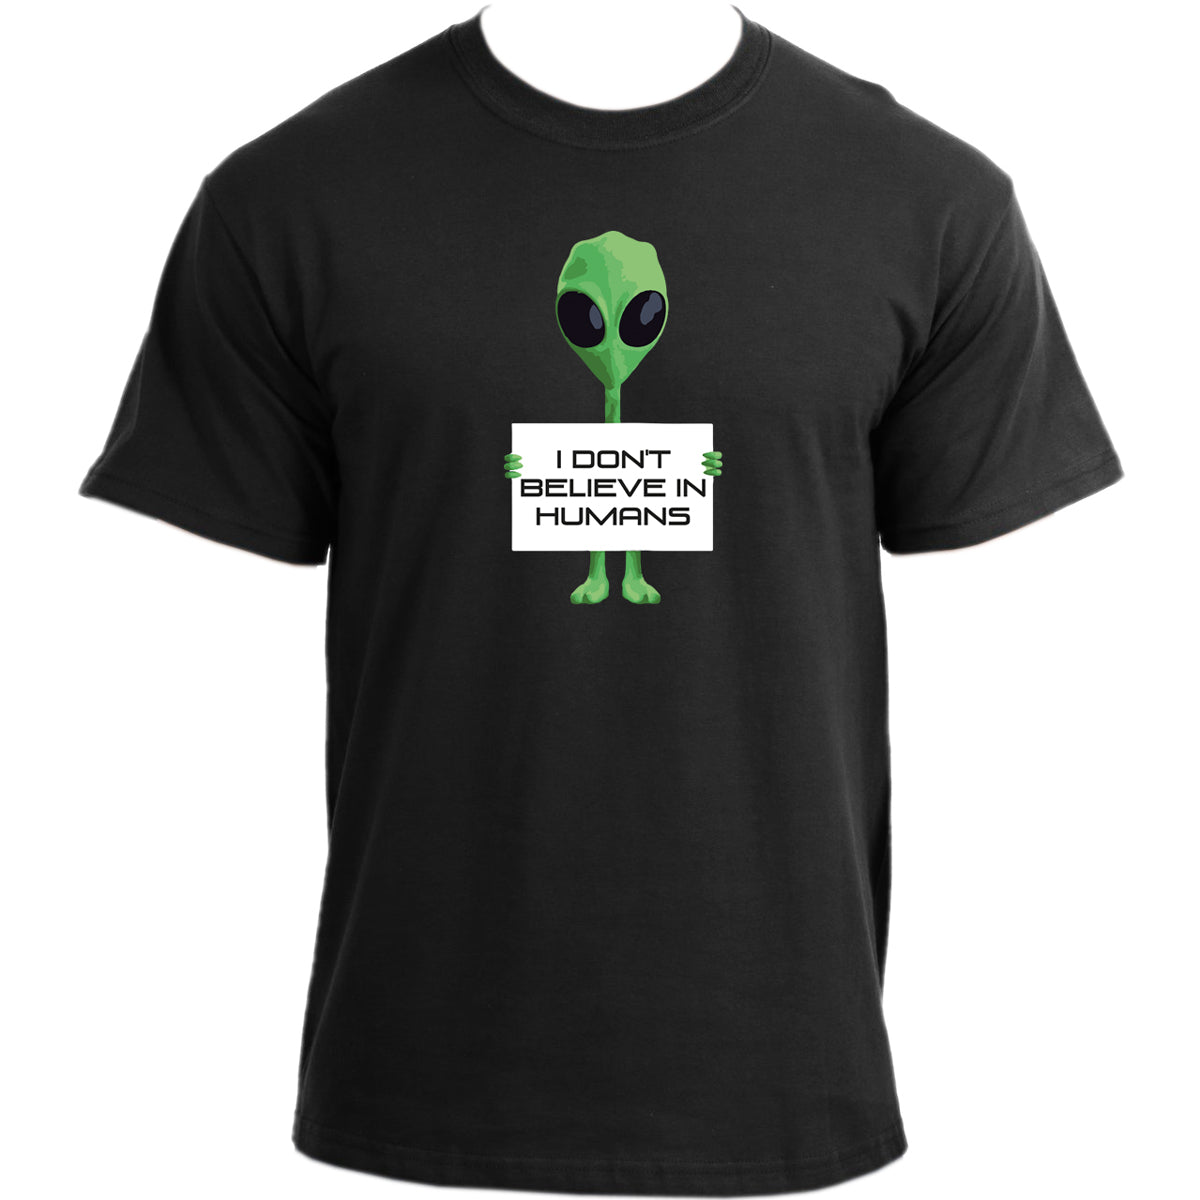 I don't believe in humans T-Shirt I Funny Alien T Shirt I UFO Tee Men's T-shirt